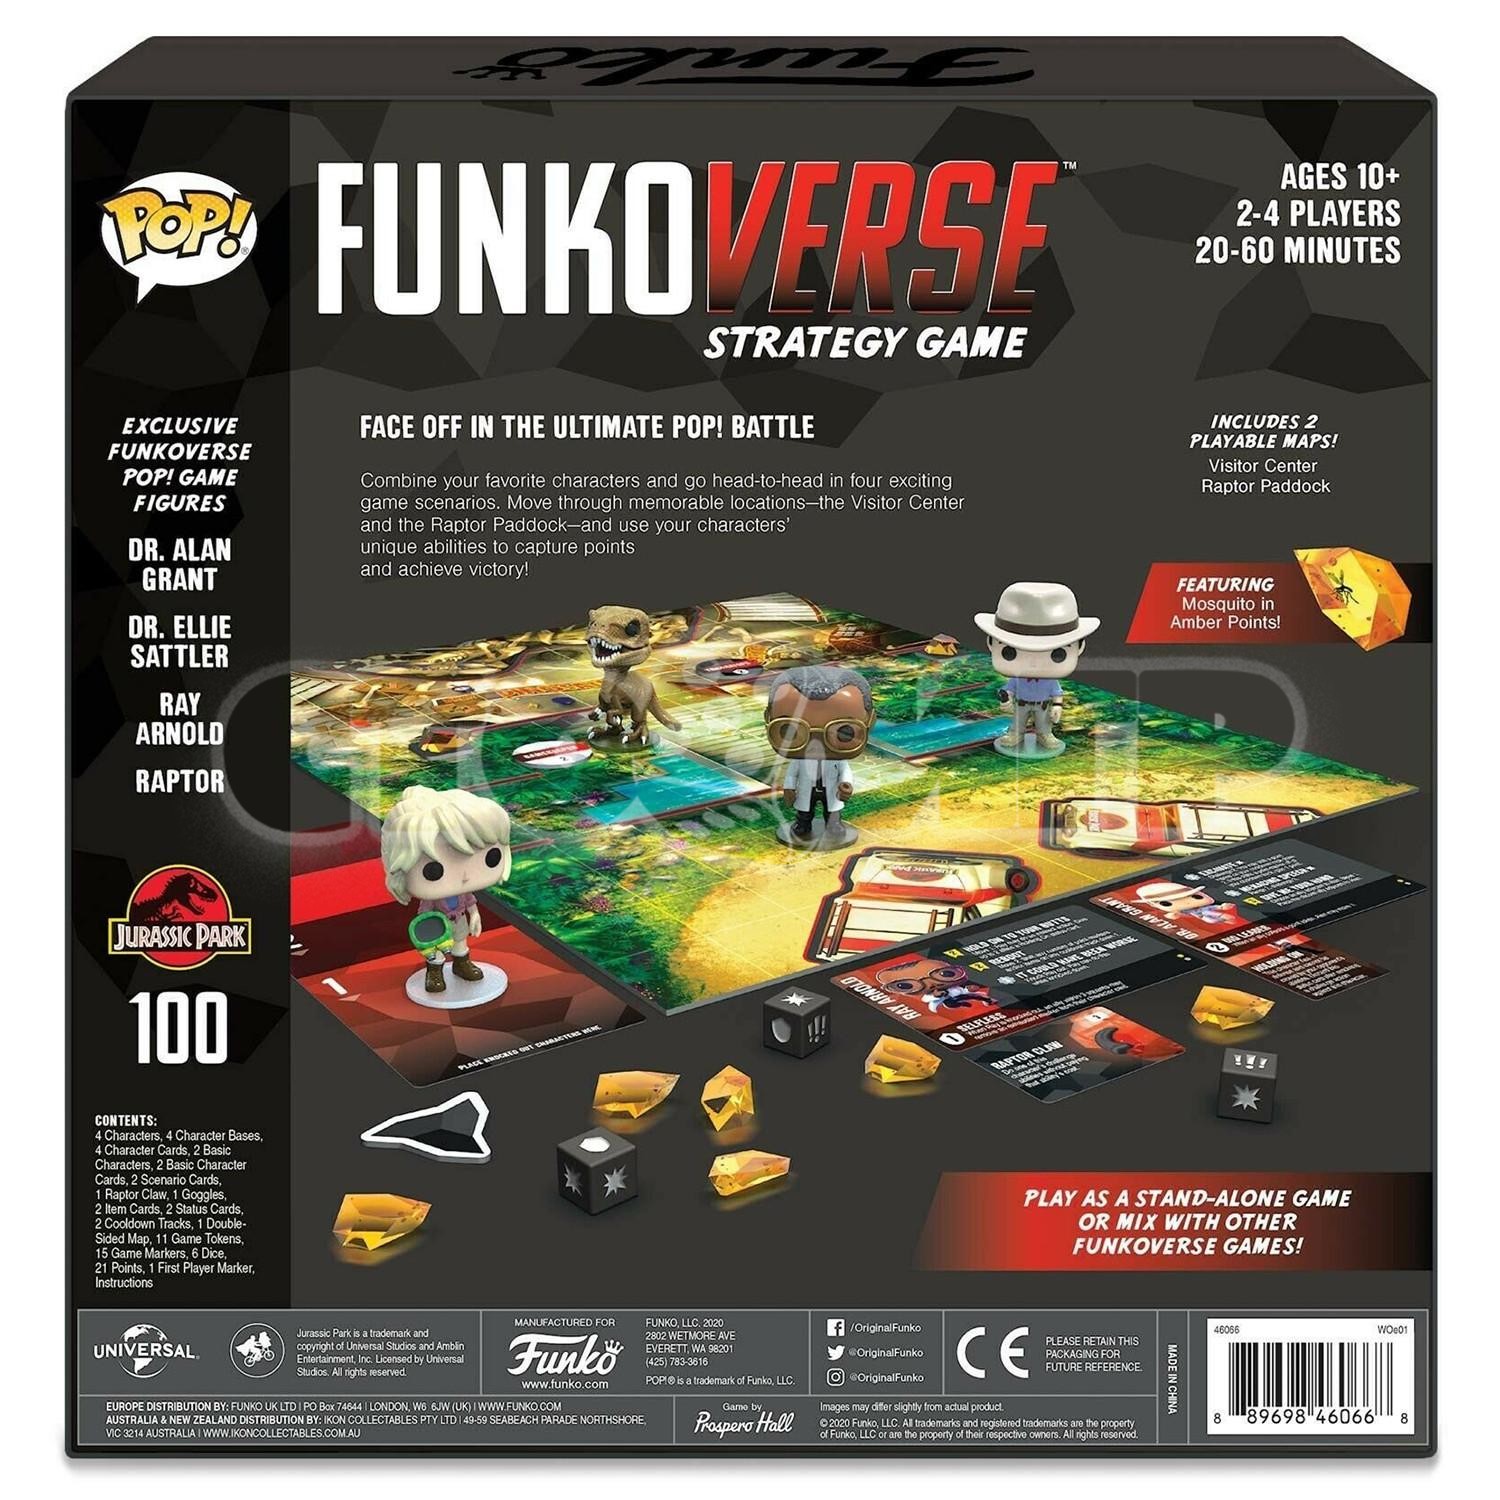 Funkoverse. Jurassic Park 100 Base Set